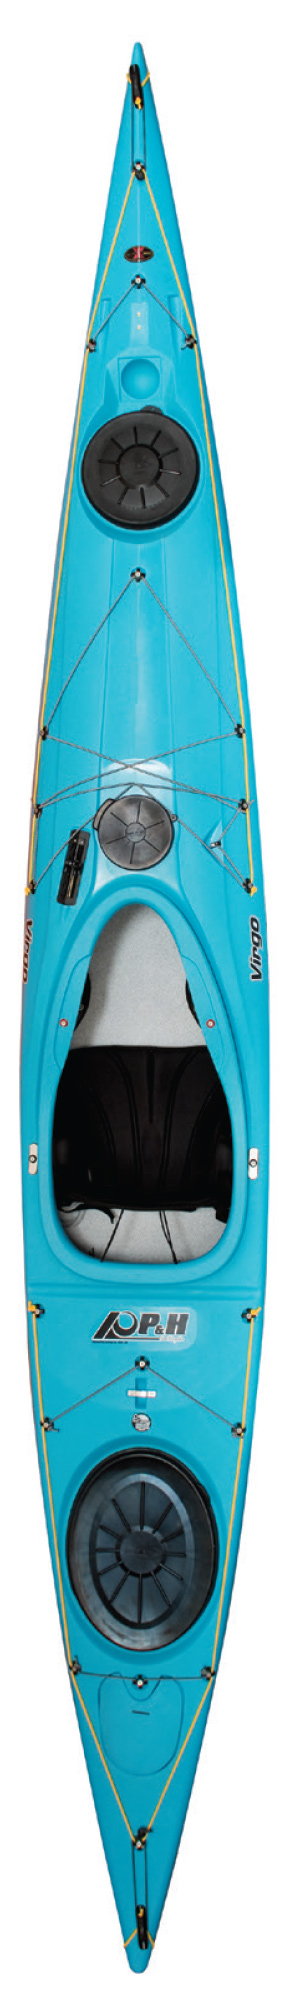 Blue sea kayak